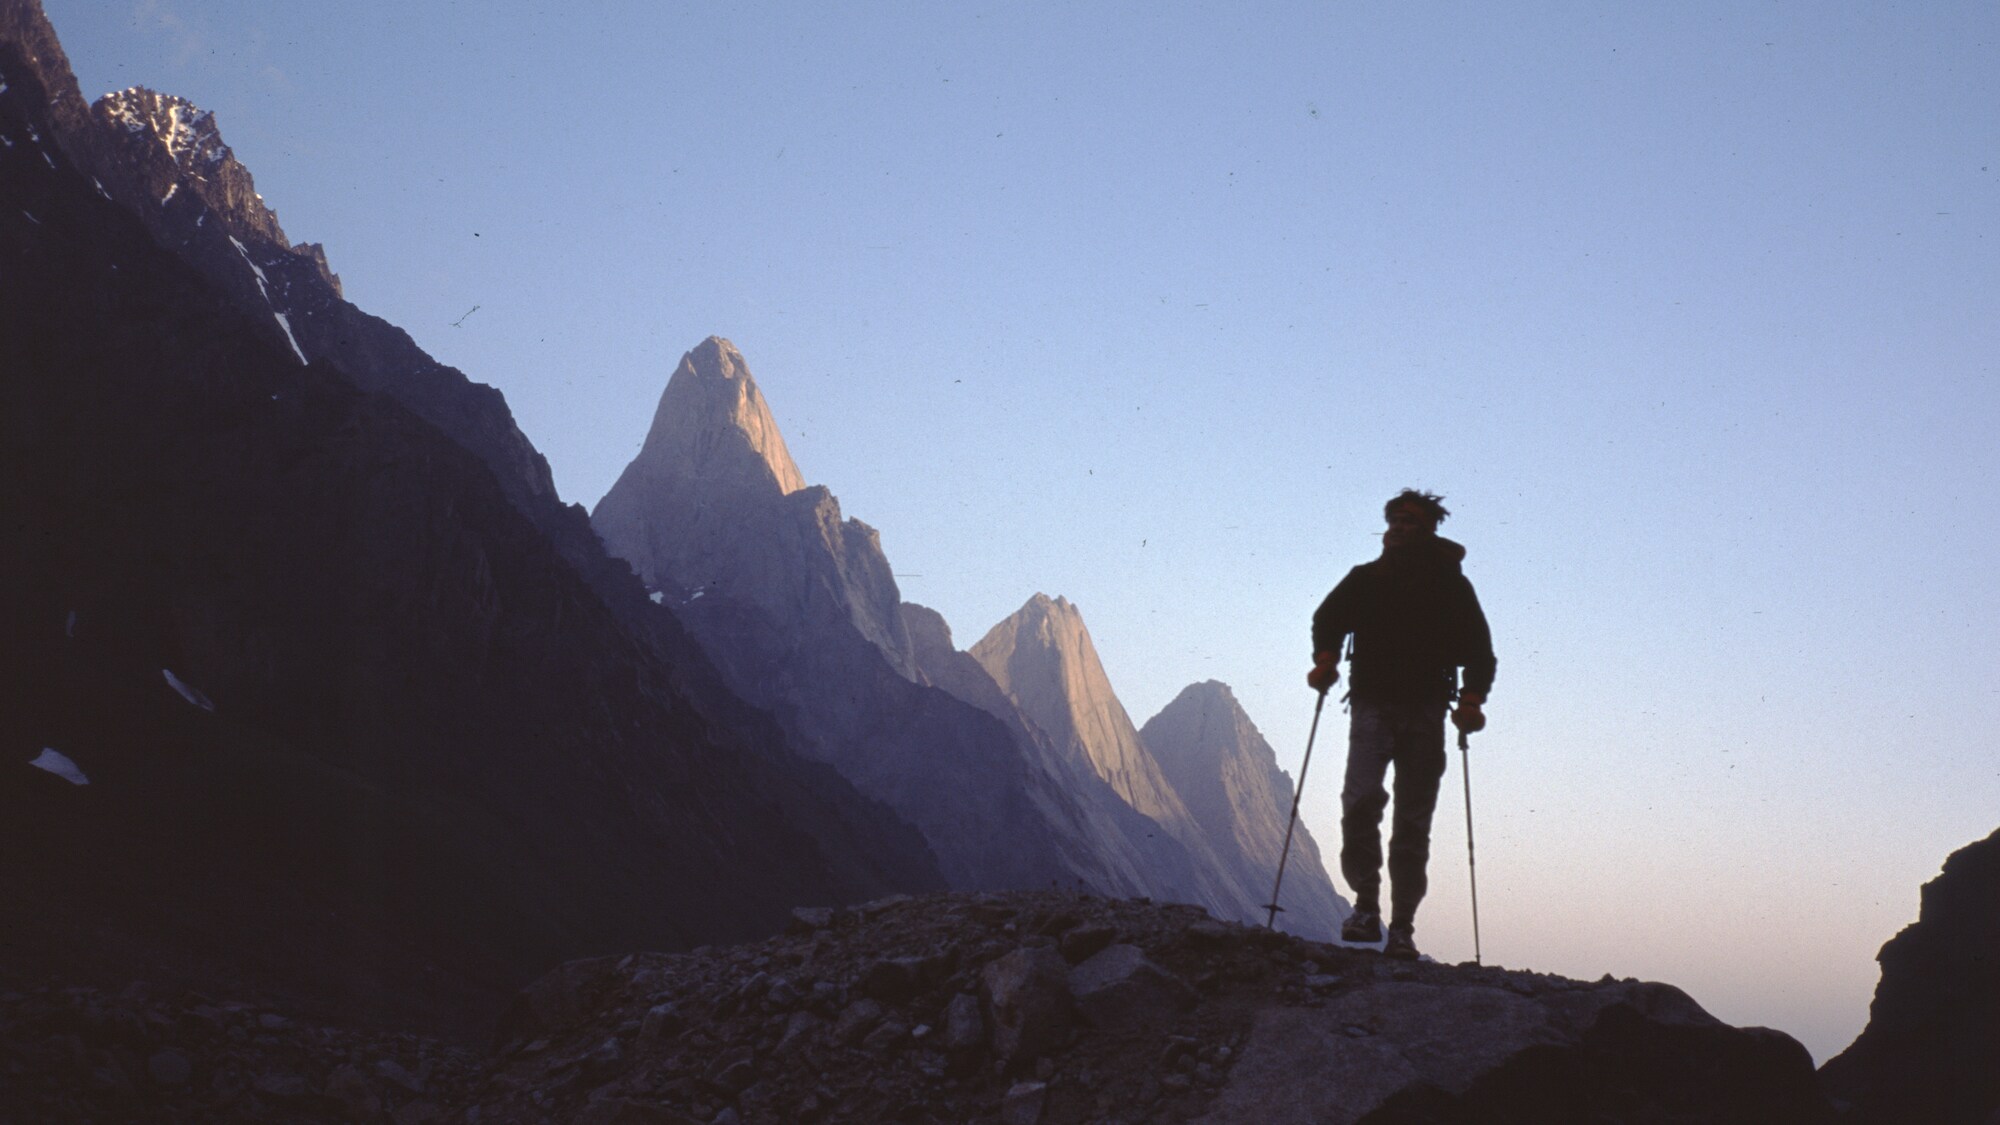 Alex Lowe with Peak 4810 in the background, Ak Su Krgyzstan 1995. (Credit: Conrad Anker)